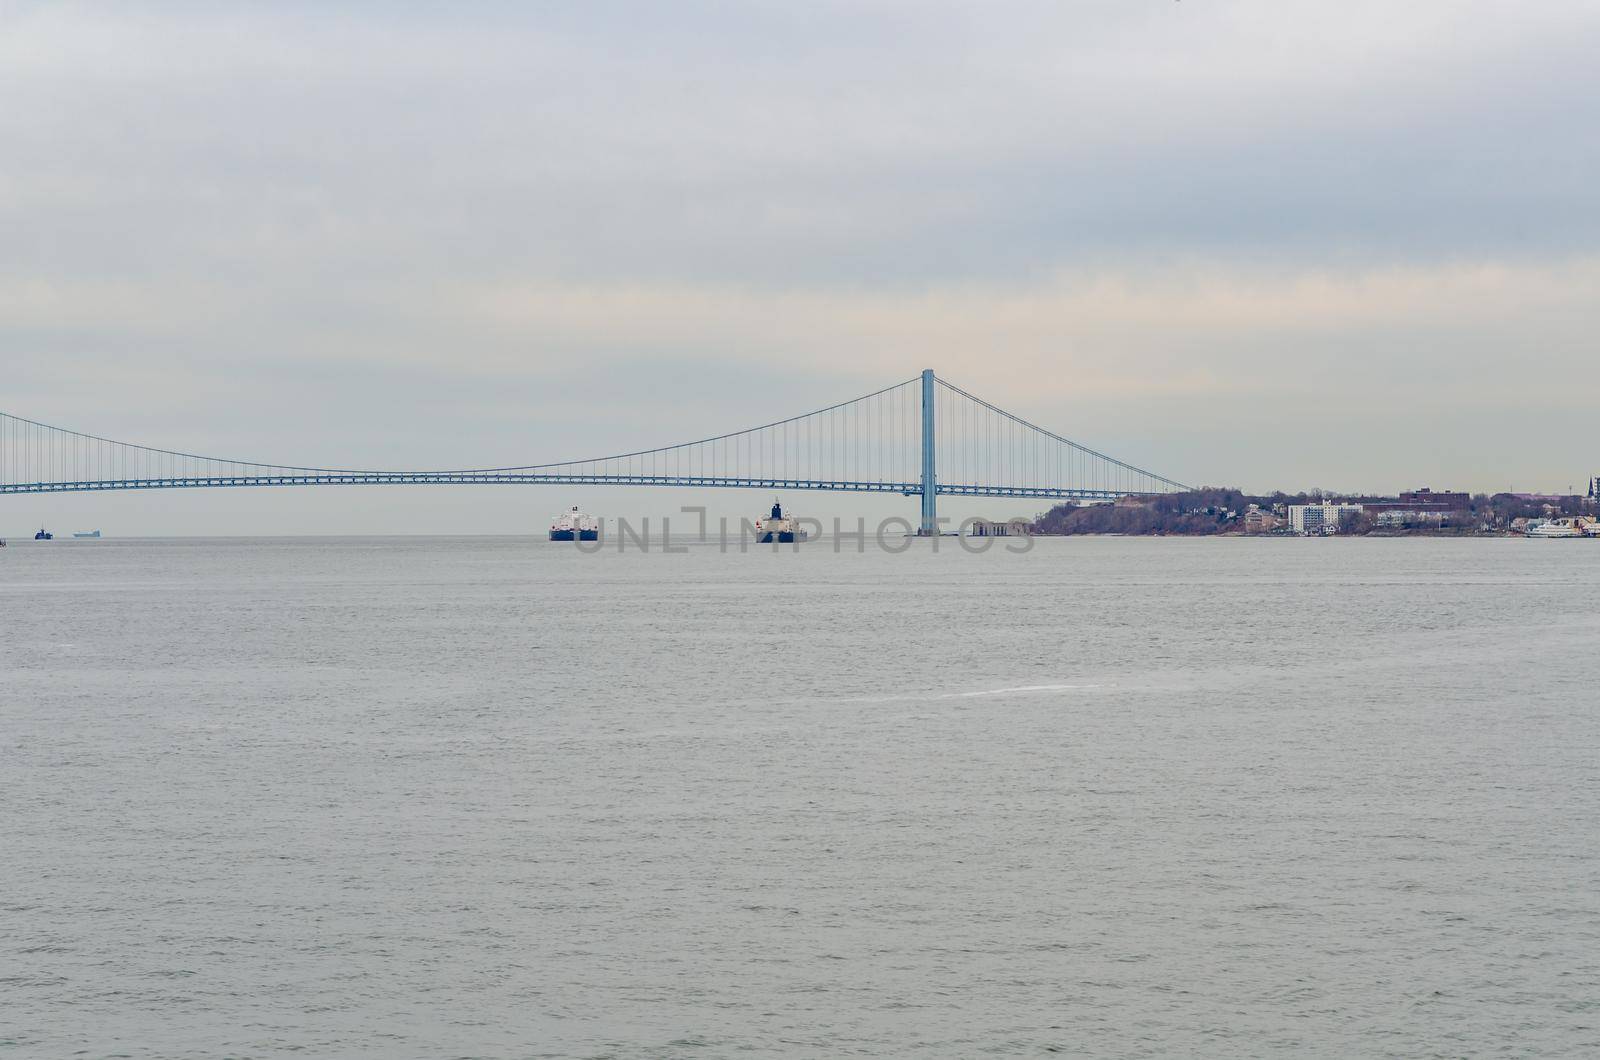 Two industrial ships underneath Verrazano-Narrows Bridge, New York City by bildgigant